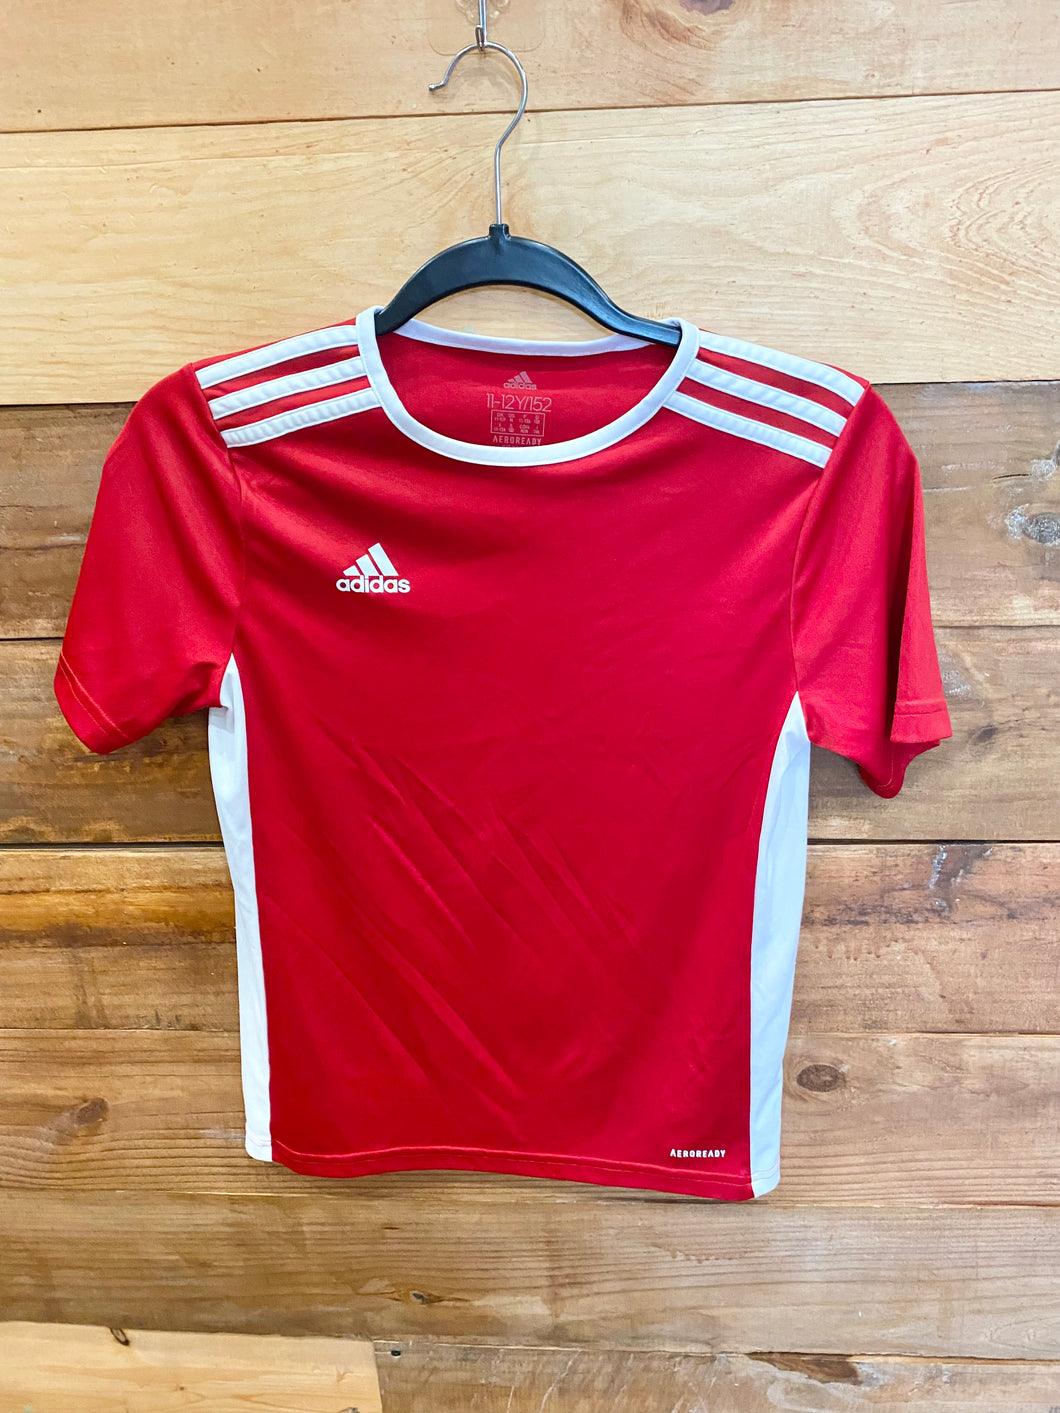 Adidas Red Shirt Size 11-12Y